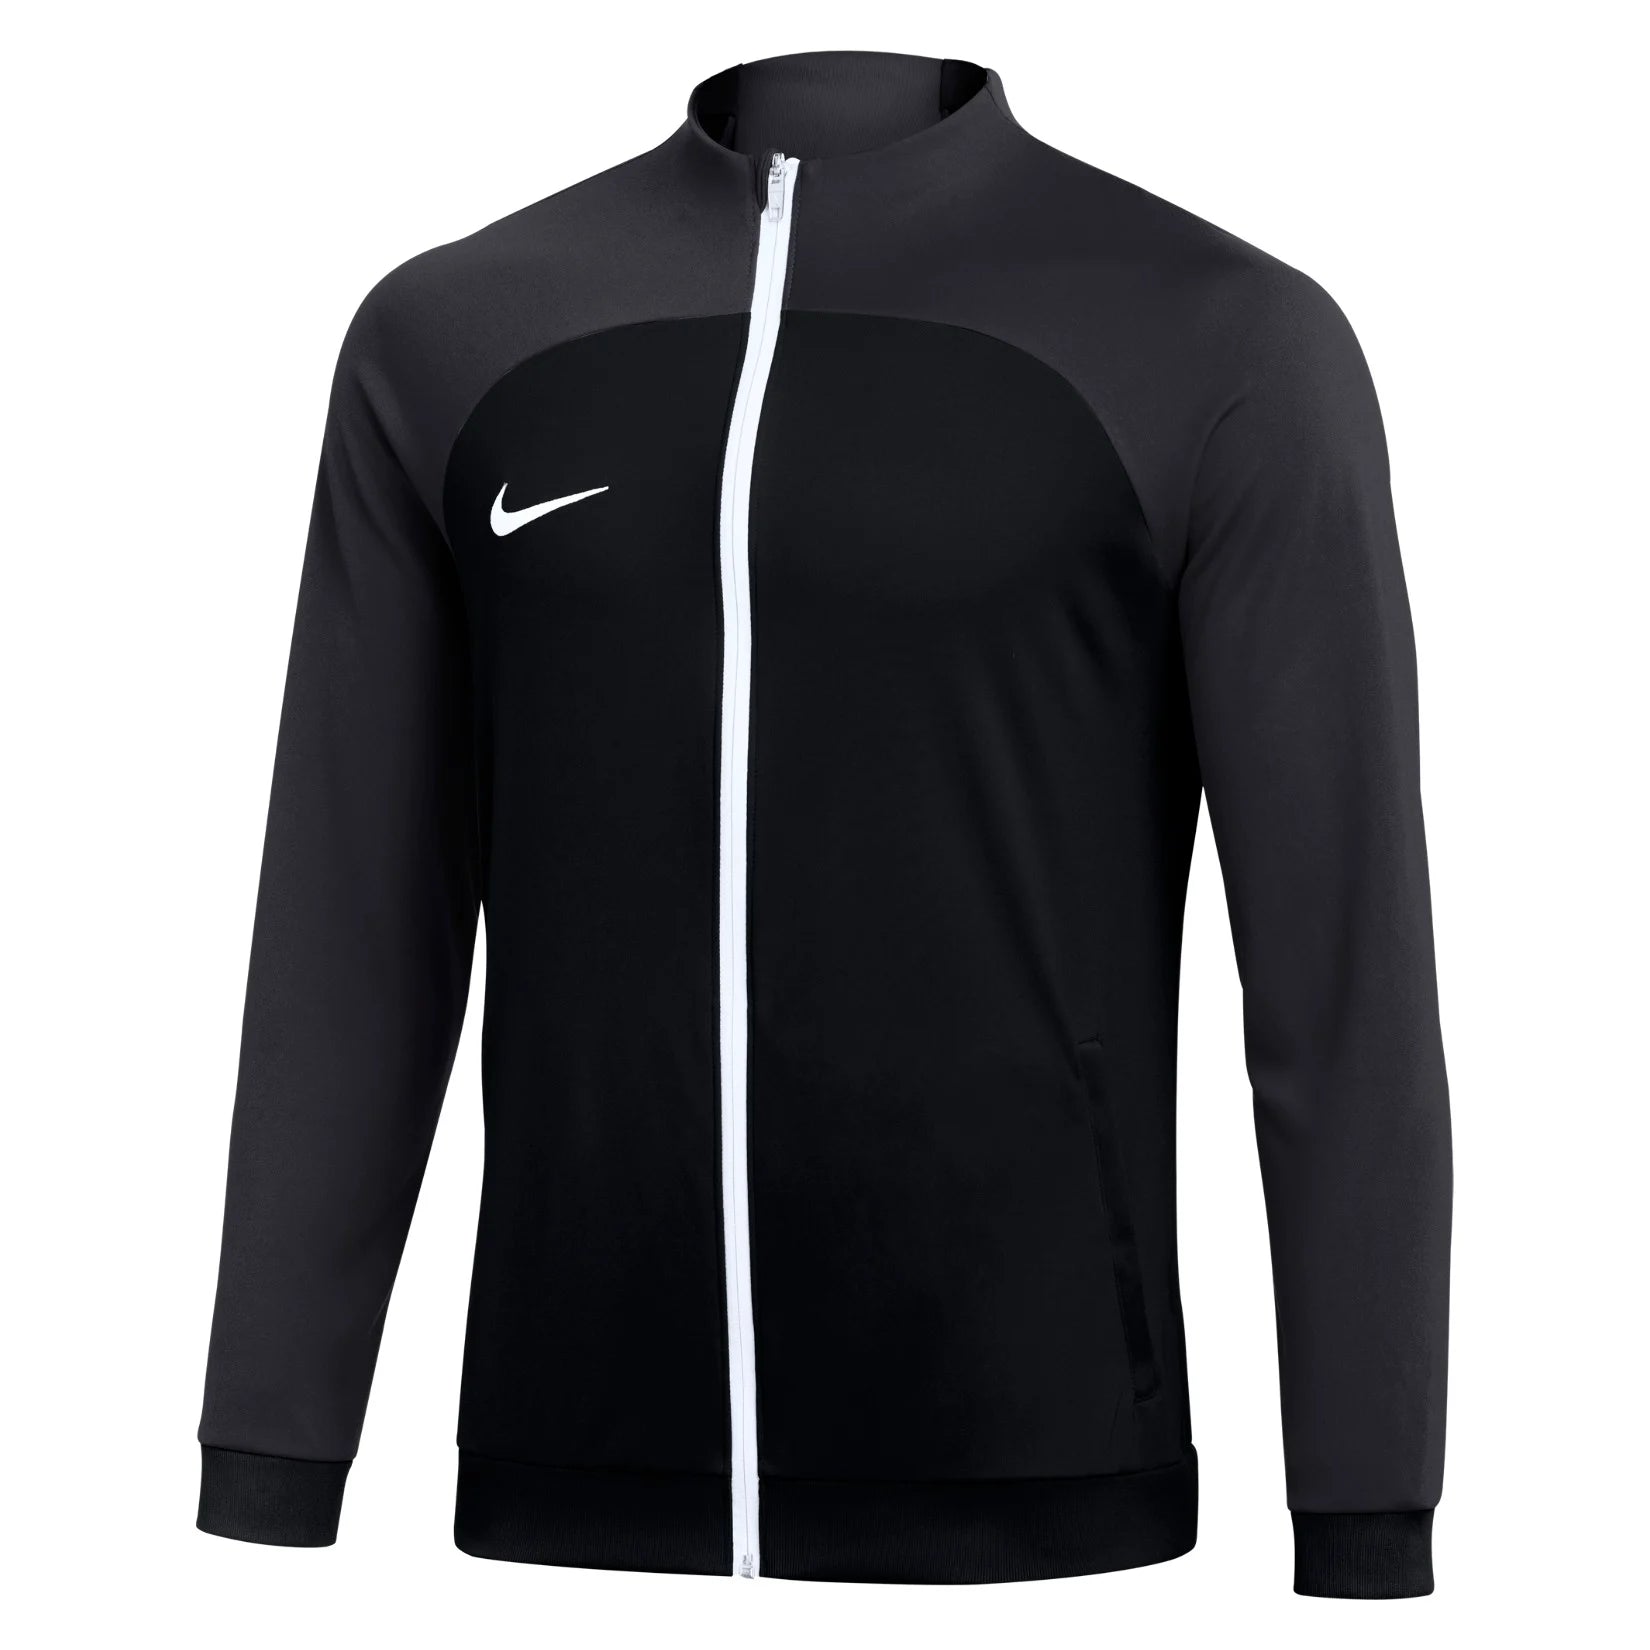 2023/24 Nike Referee Jacket - A&H International